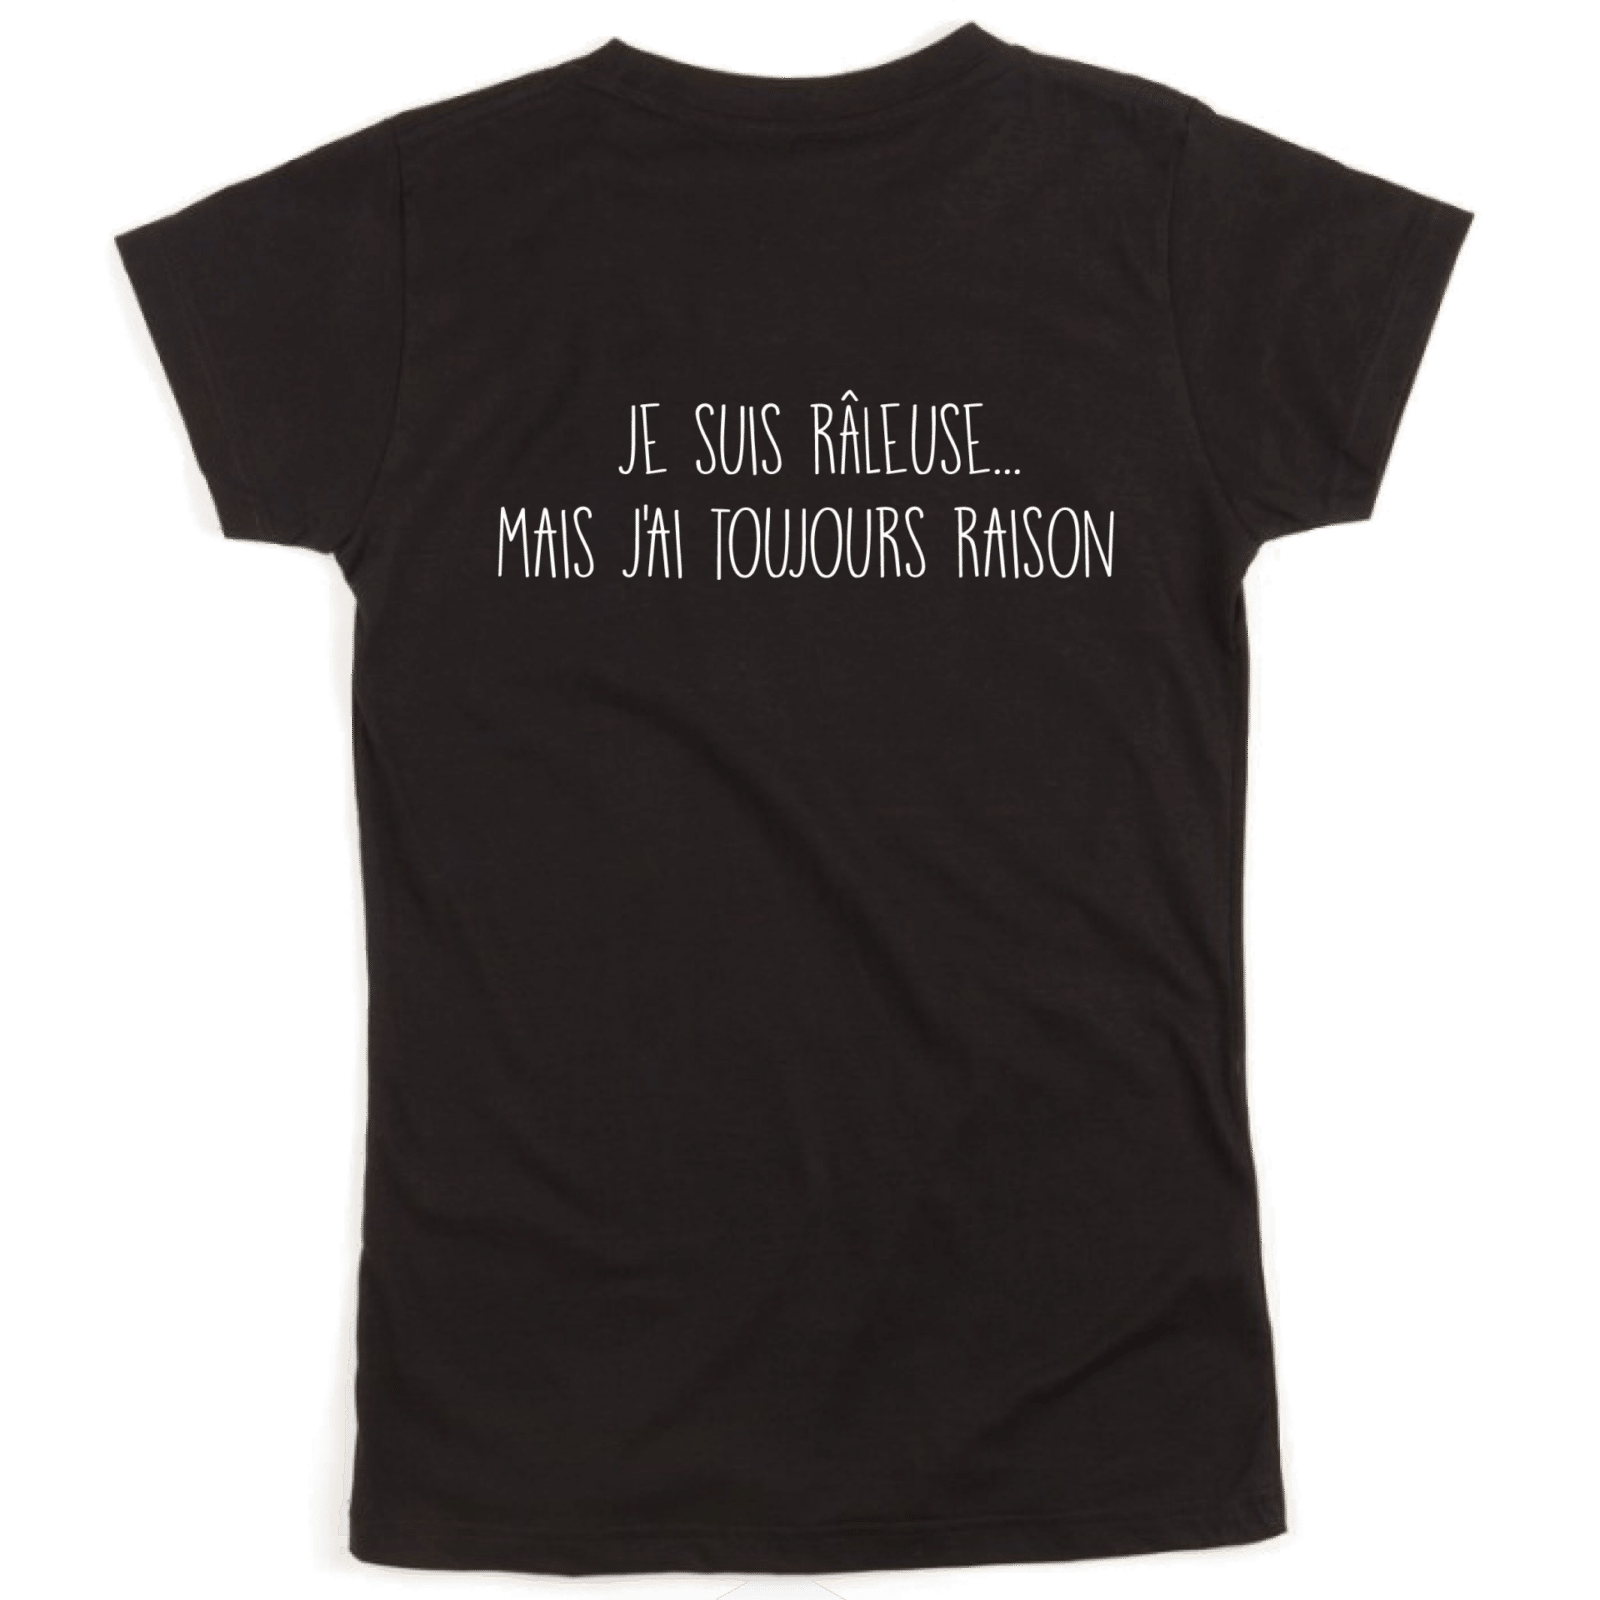 MGS Sérigraphie 302 raleuse [CONCOURS] Un t-shirt Mars Attack avec MGS SÉRIGRAPHIE Concours